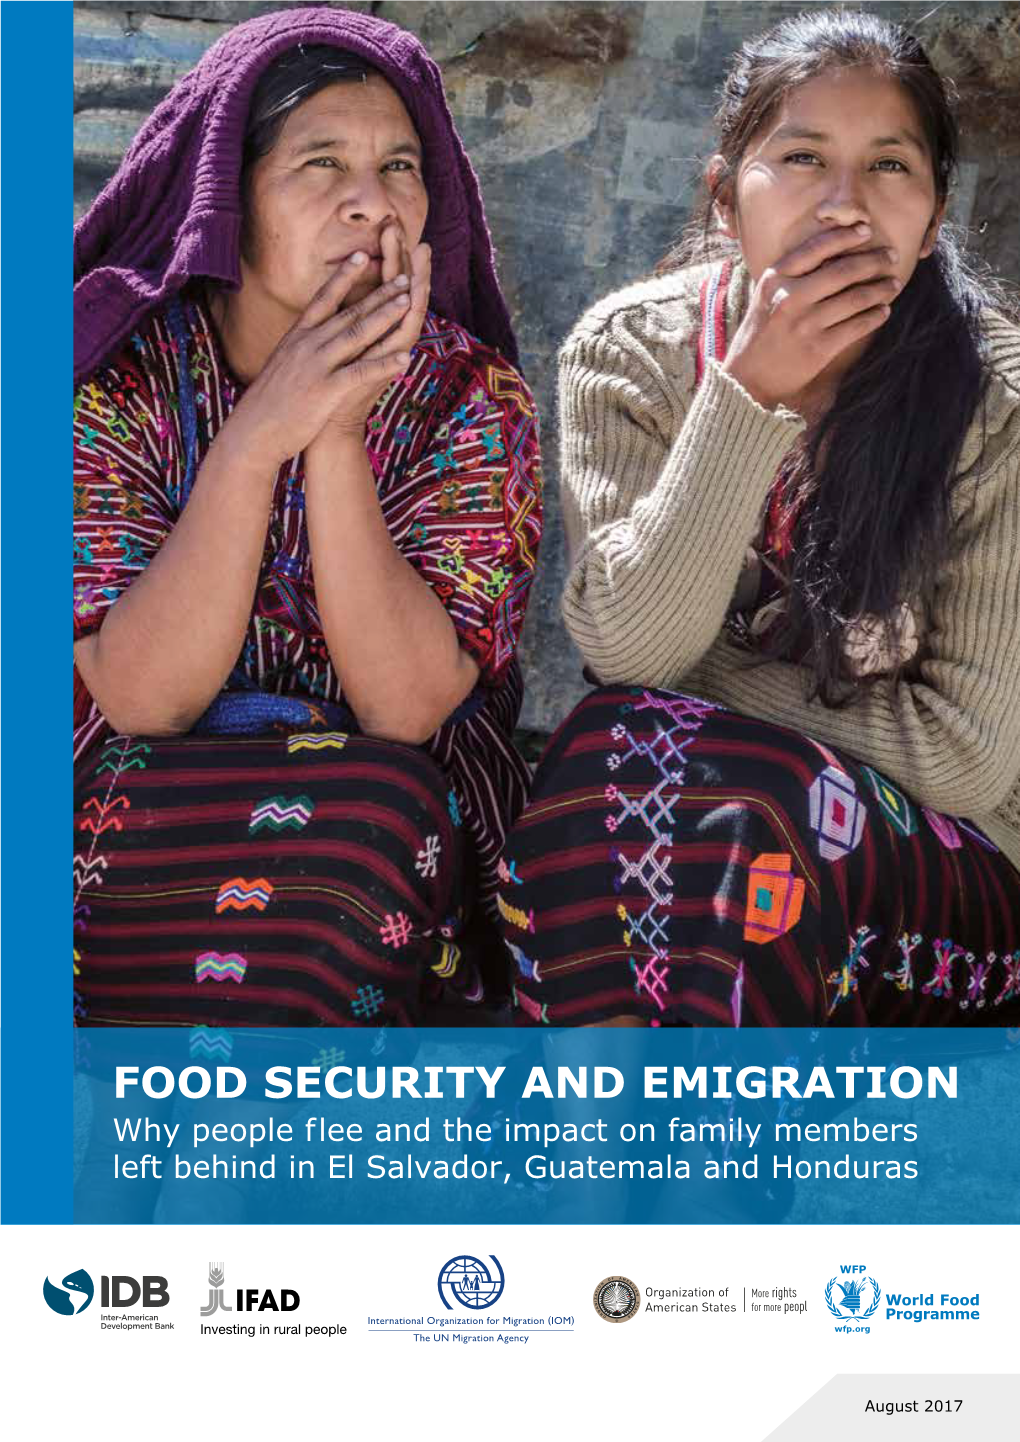 Food Security and Emigration in El Salvador, Guatemala and Honduras